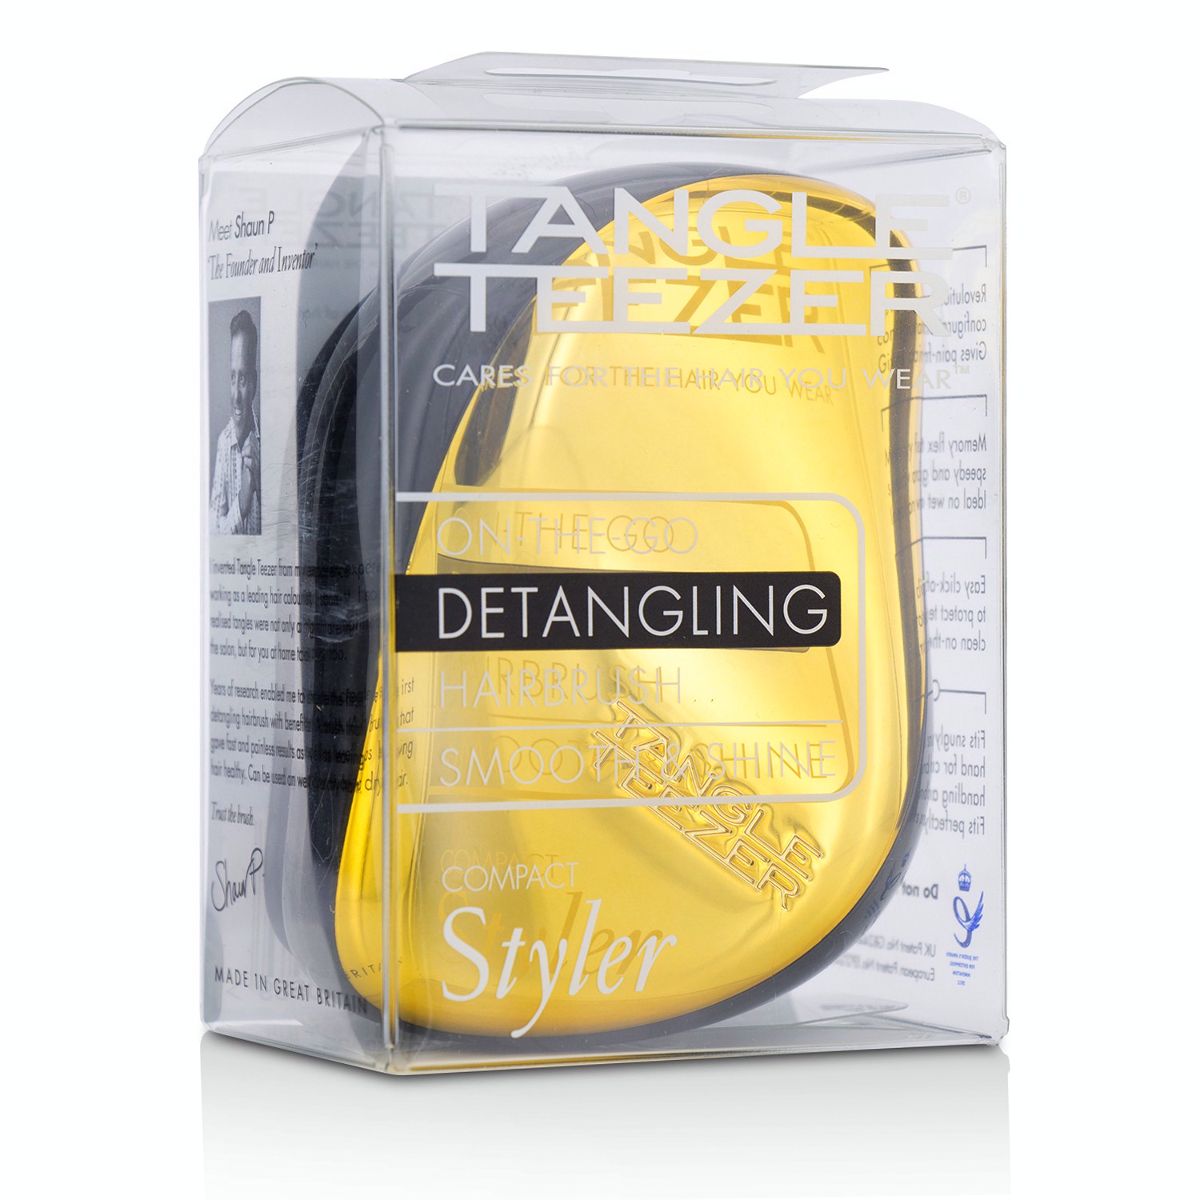 Compact Styler On-The-Go Detangling Hair Brush - # Bronze Chrome Tangle Teezer Image